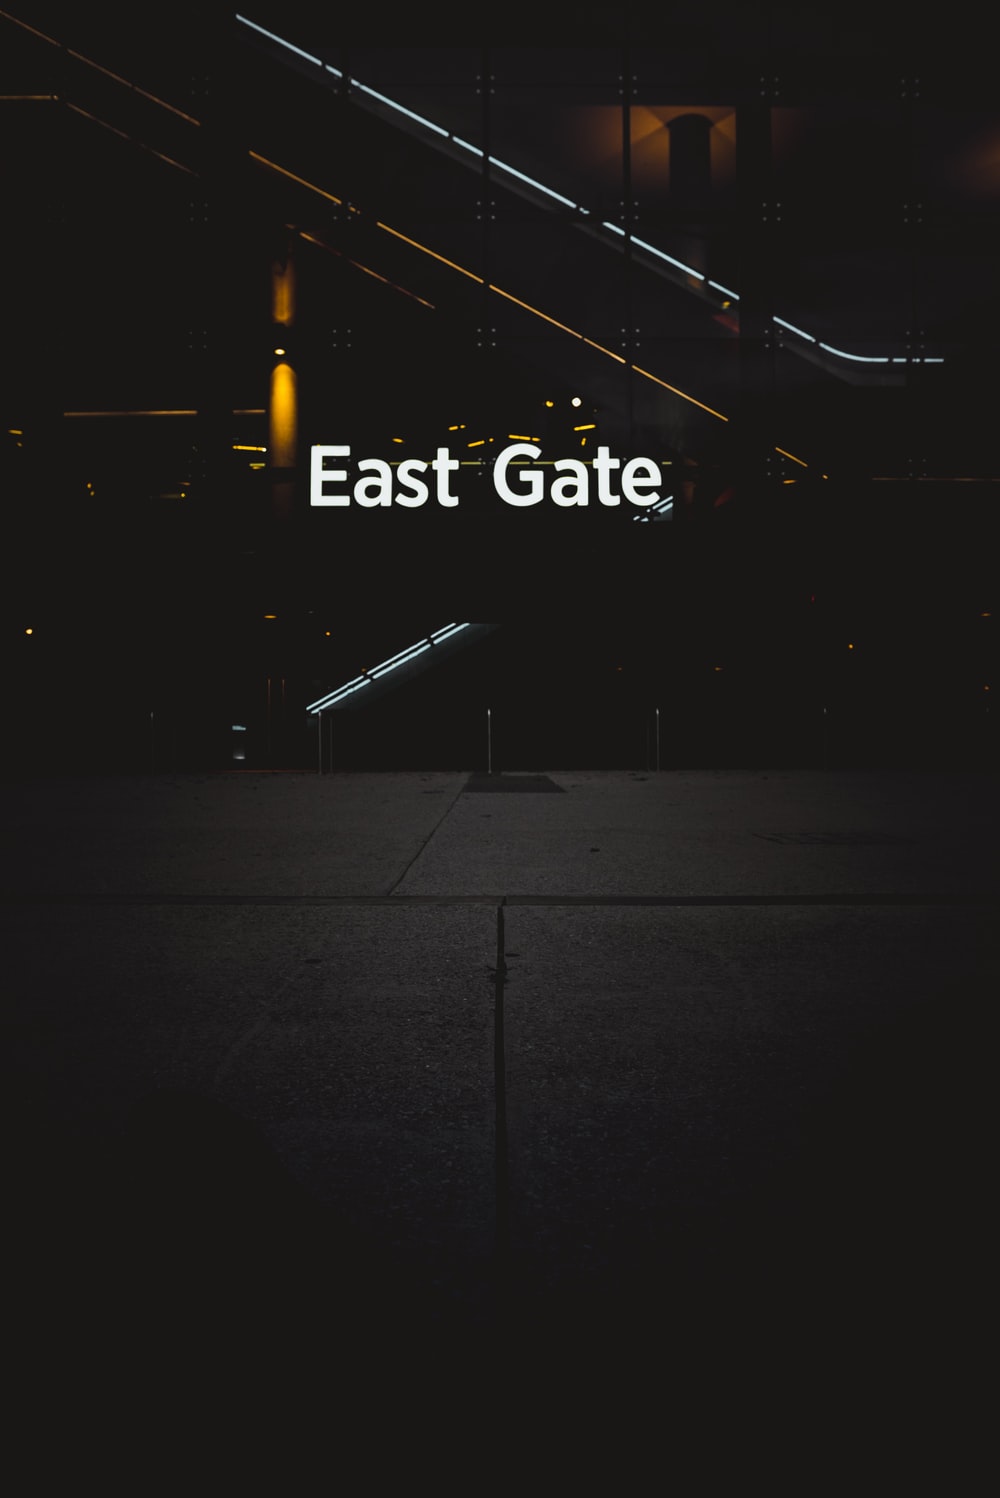 East Gate logo with dim light photo